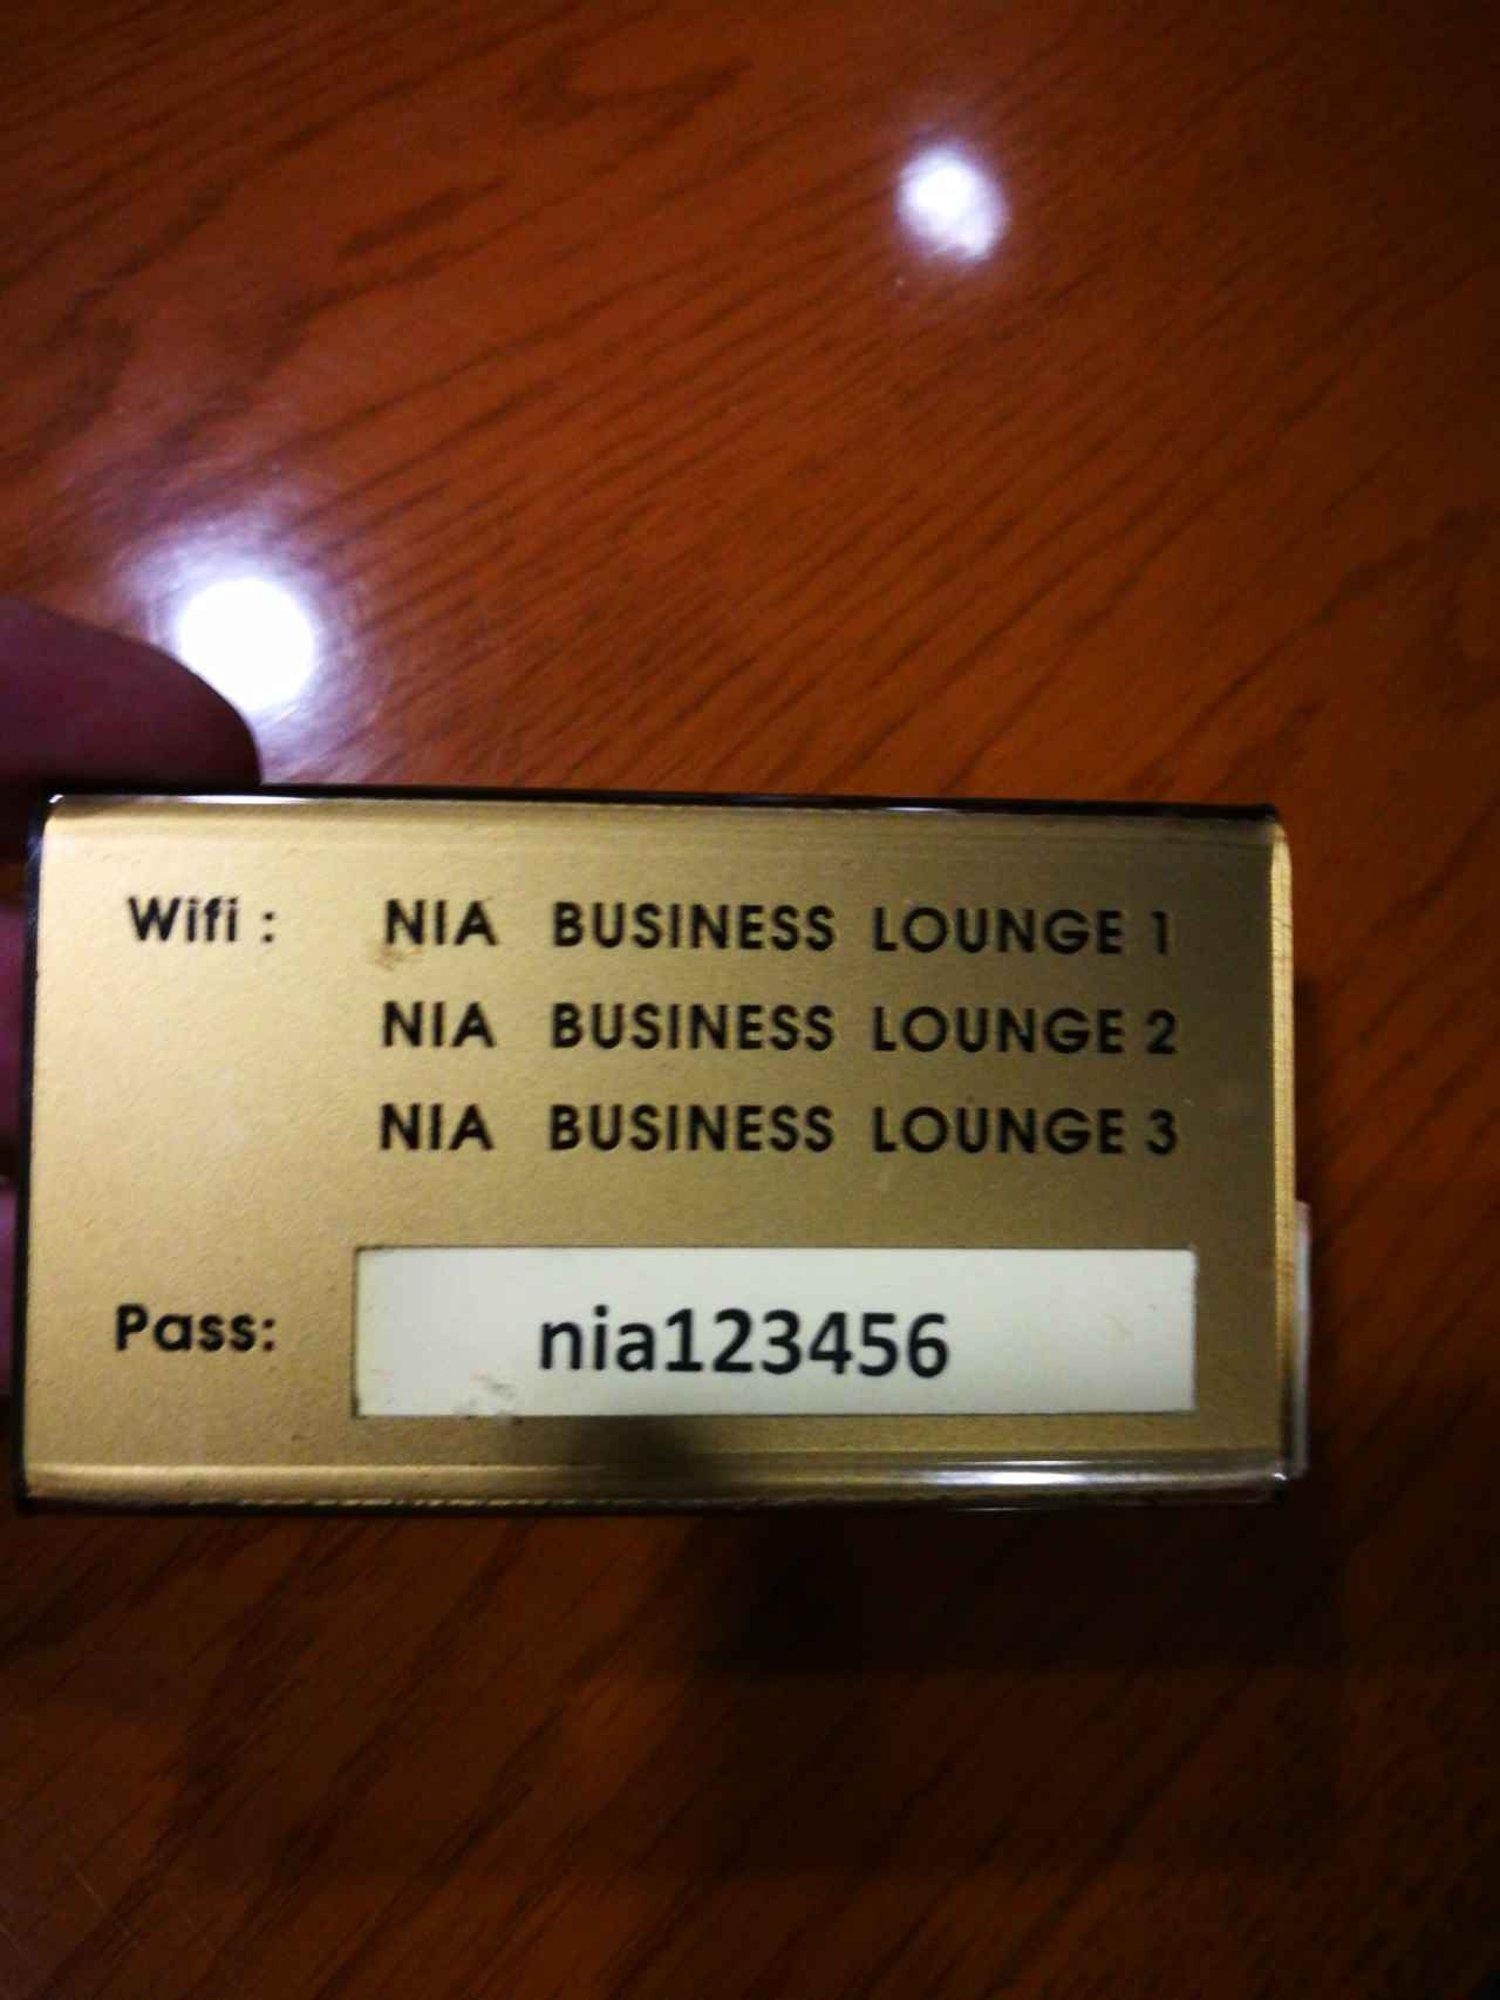 Noi Bai International Airport Business Lounge image 2 of 26